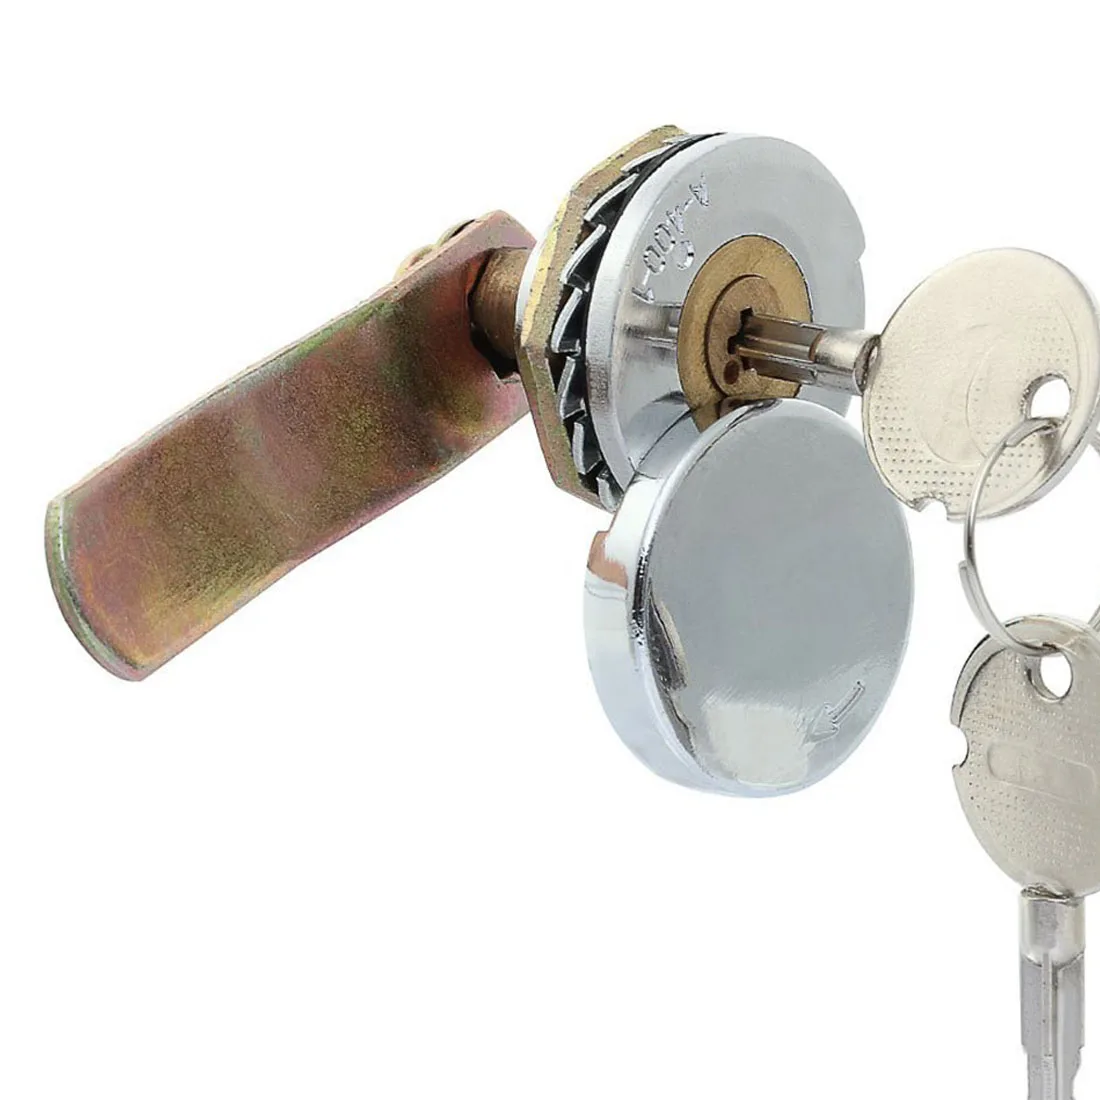 

1PCS Steady Cam Lock padlock for Security Door Cabinet Mailbox Drawer Cupboard camlock 16mm + 2 Keys